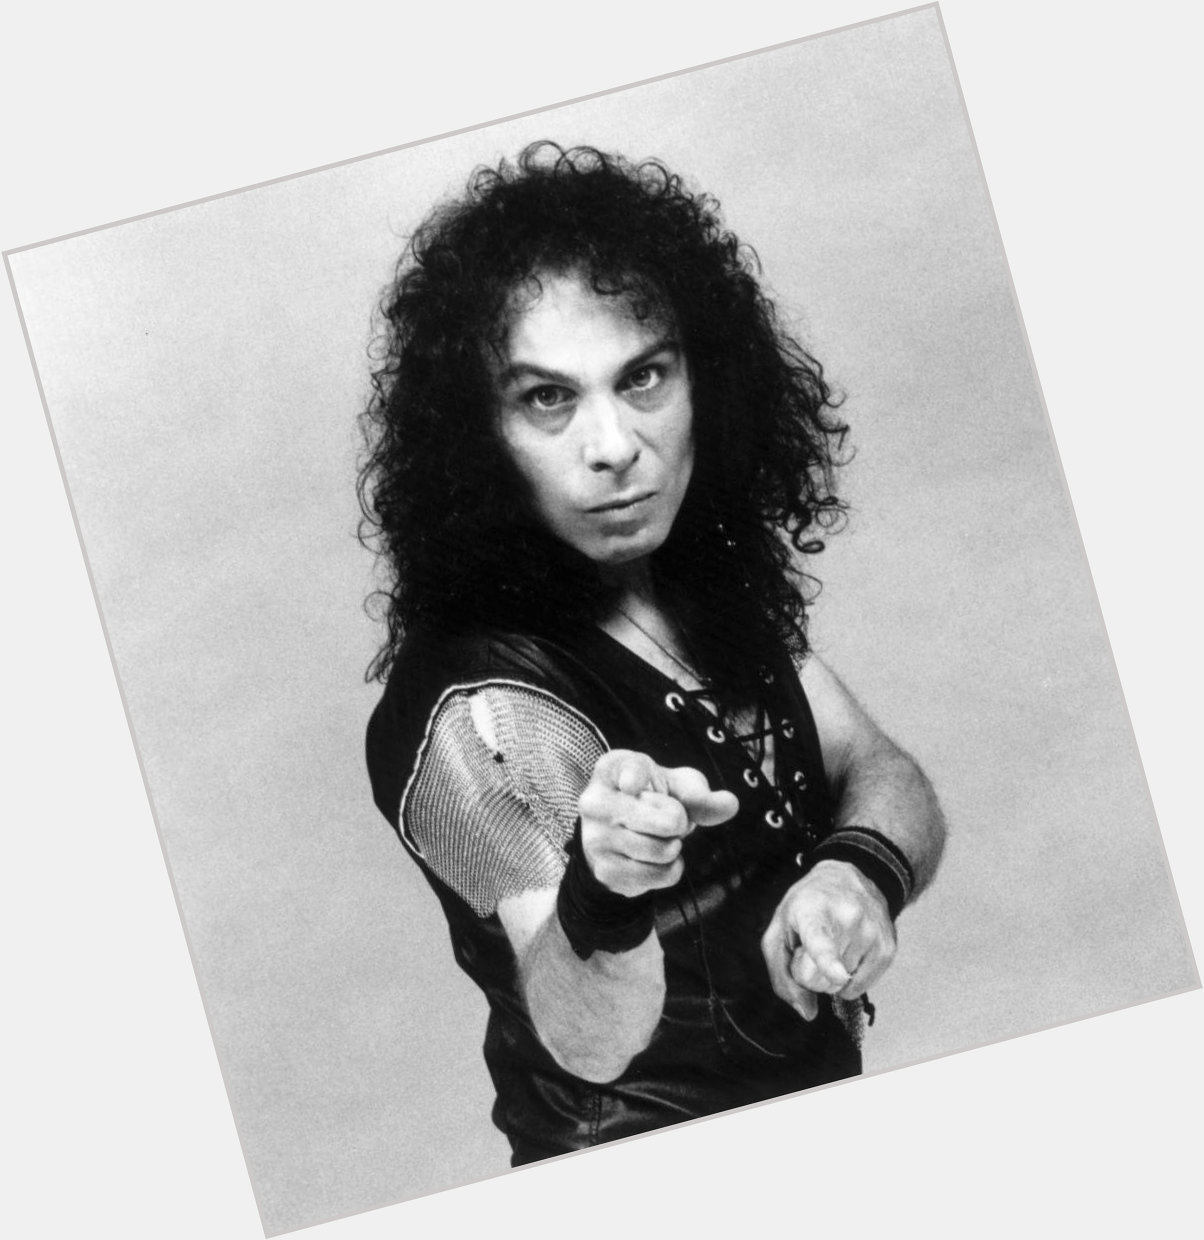 Happy Birthday Ronnie James Dio! R.I.P. 